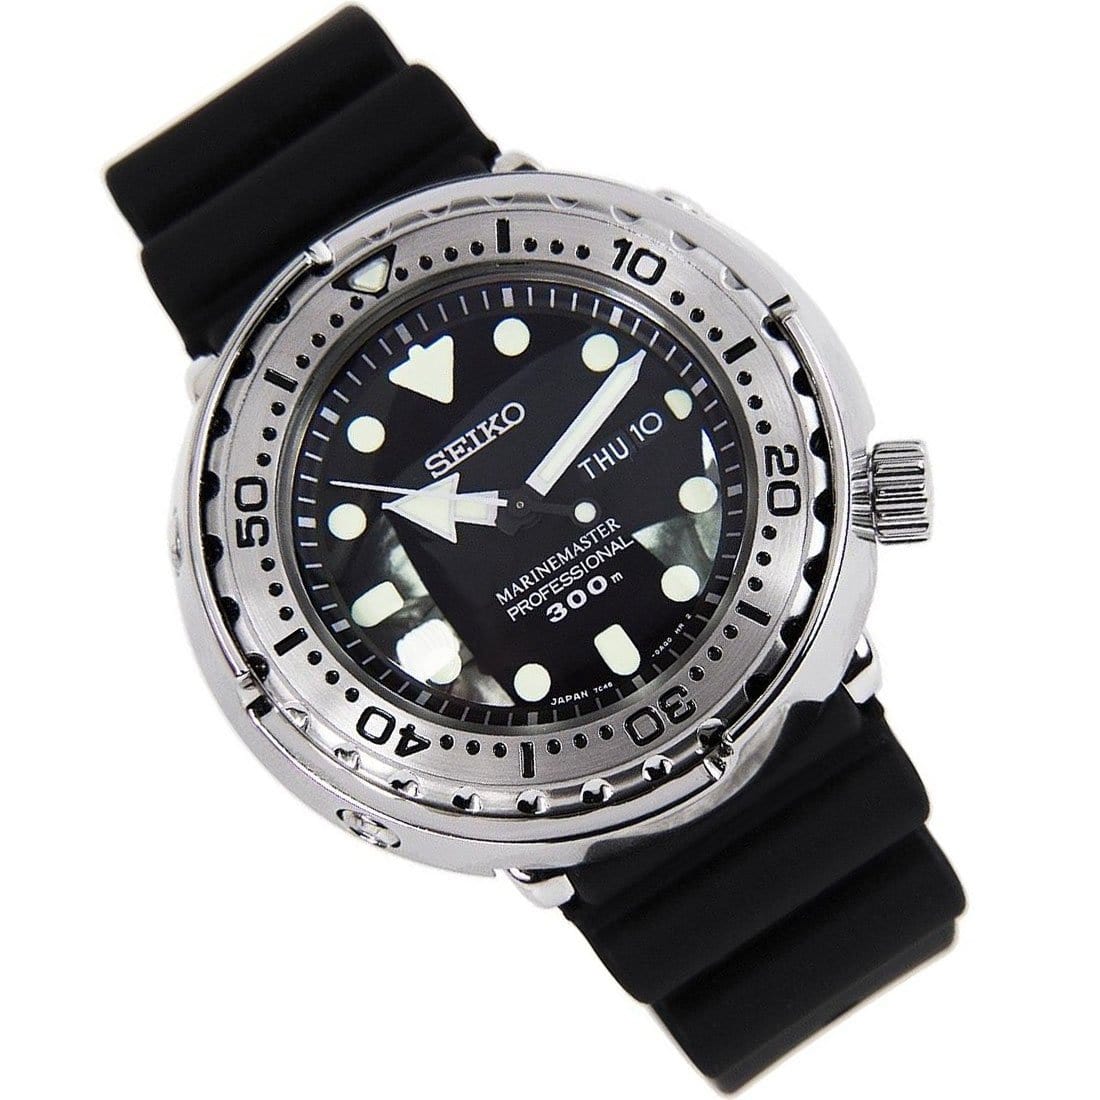 SBBN045 Seiko PROSPEX Marine Master Tuna Professional 300M JDM Watch